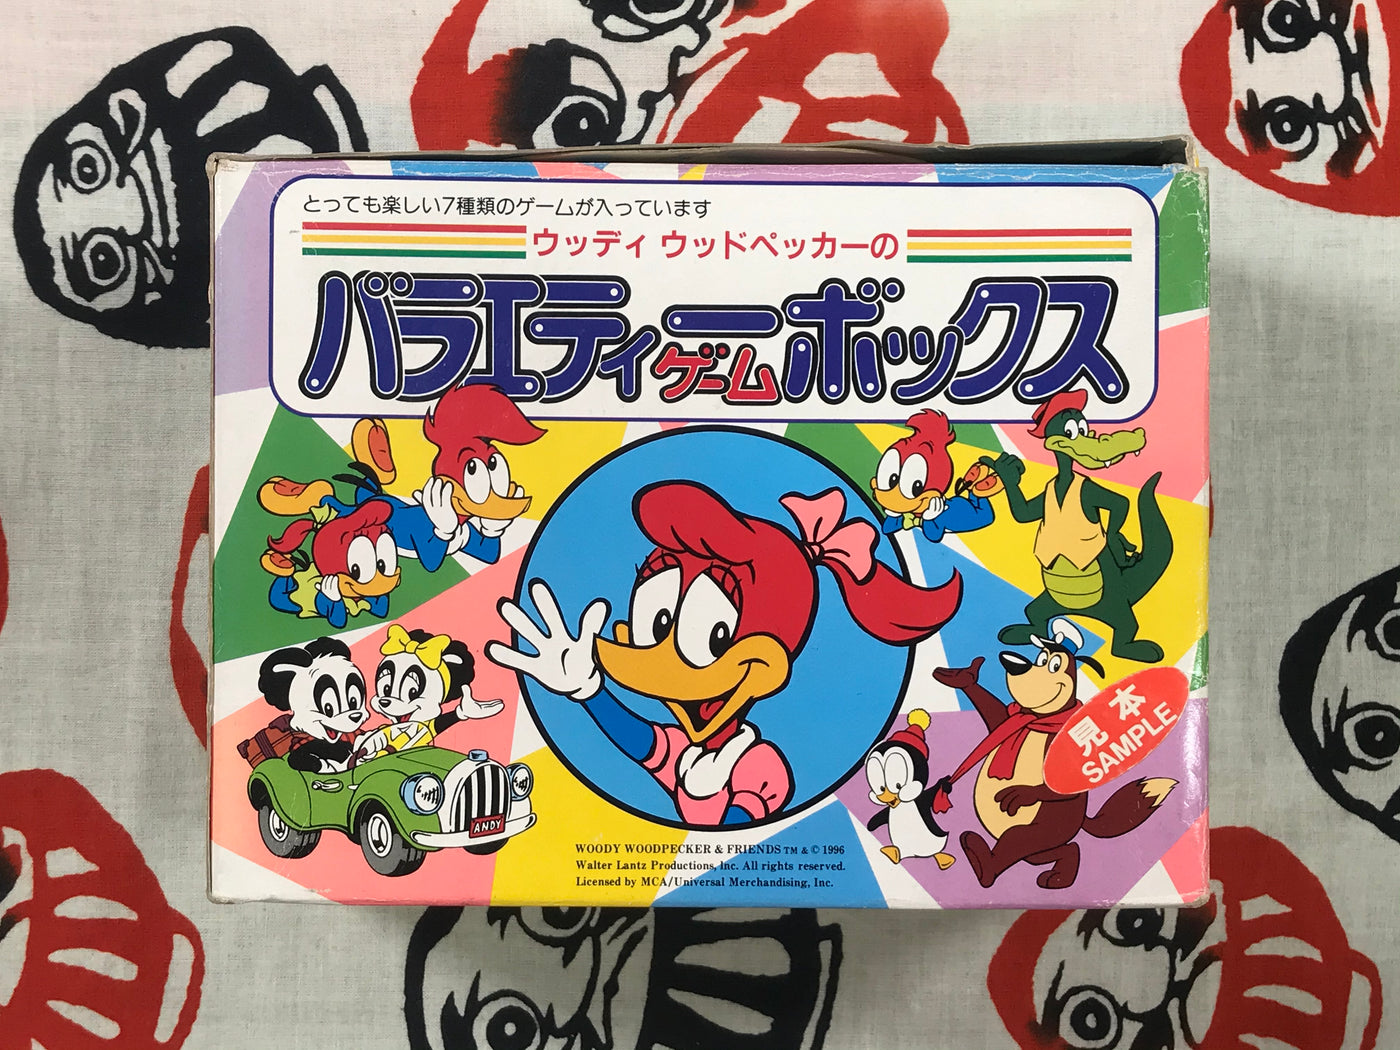 Woody Woodpecker's Variety Game Box (1996)